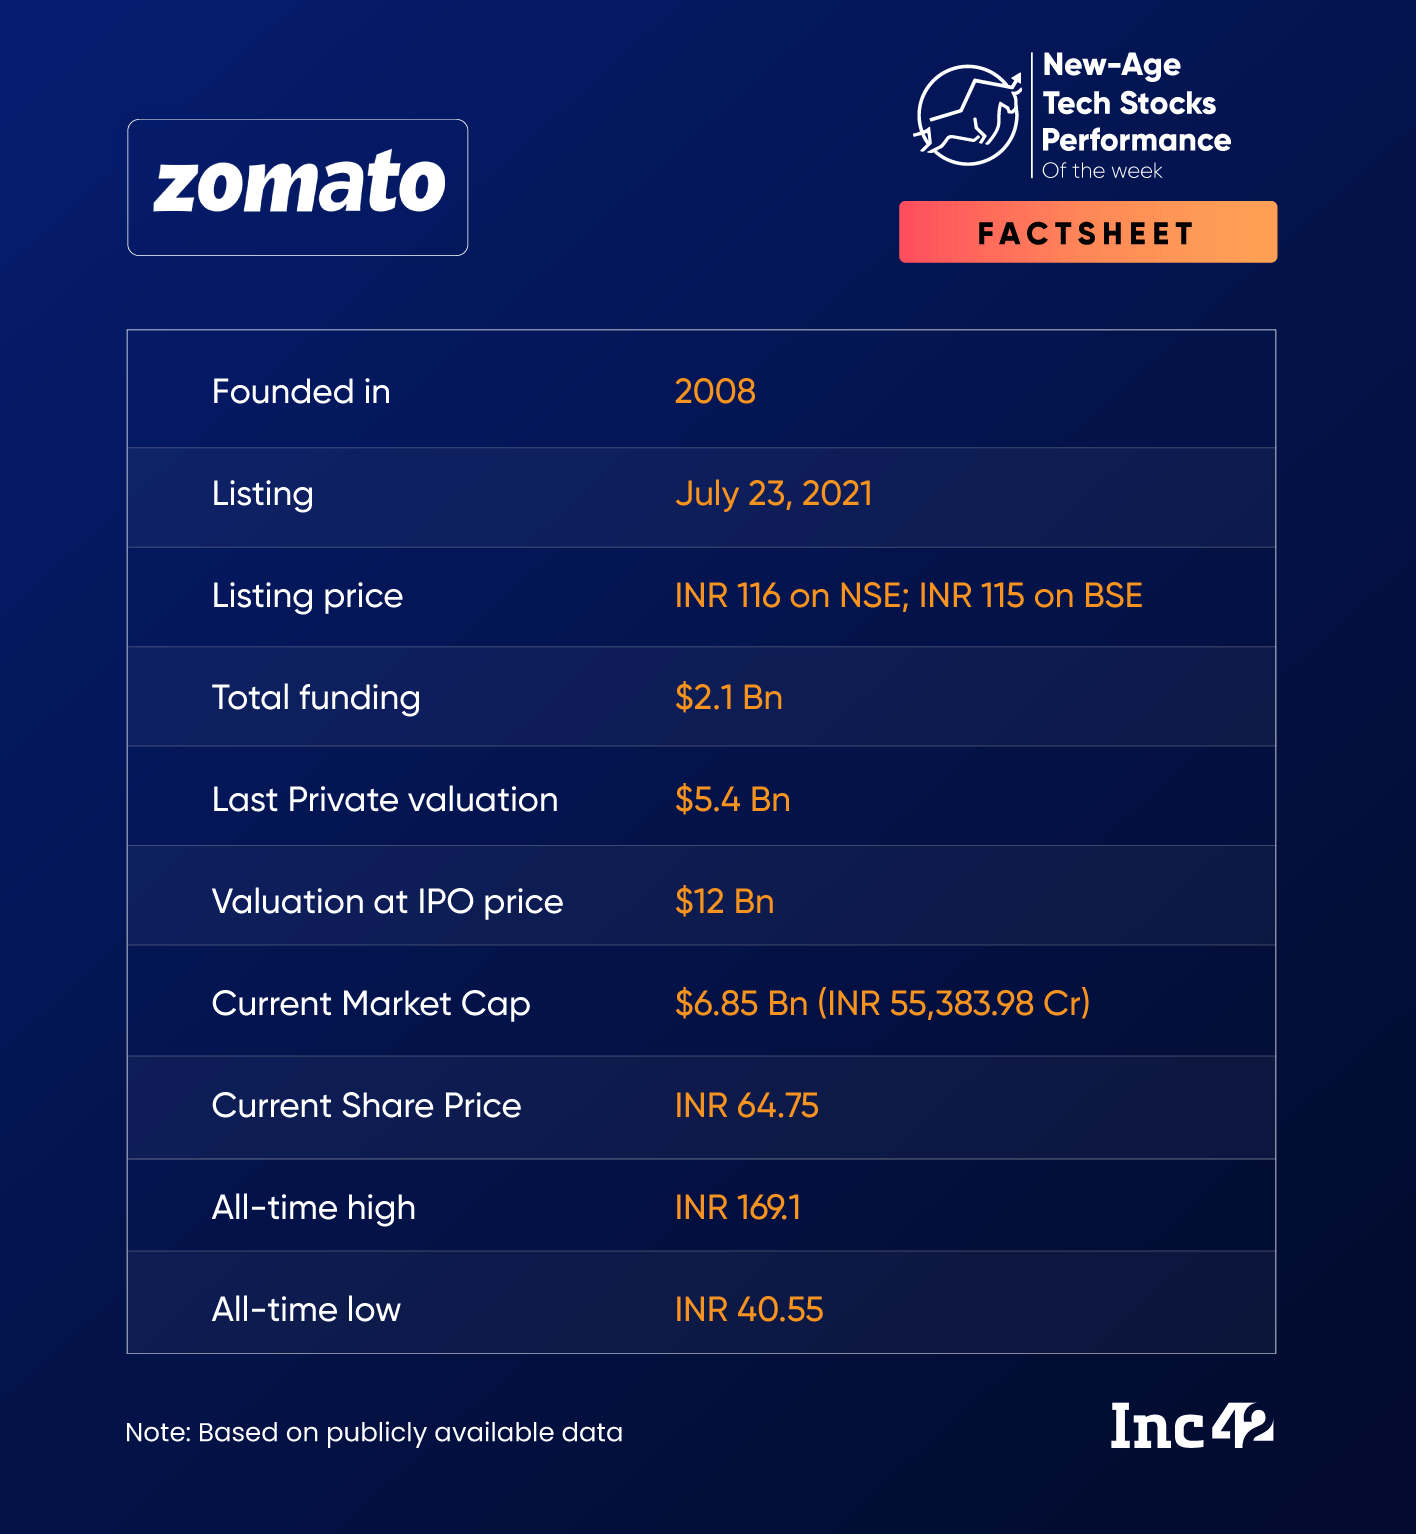 Zomato Factsheet